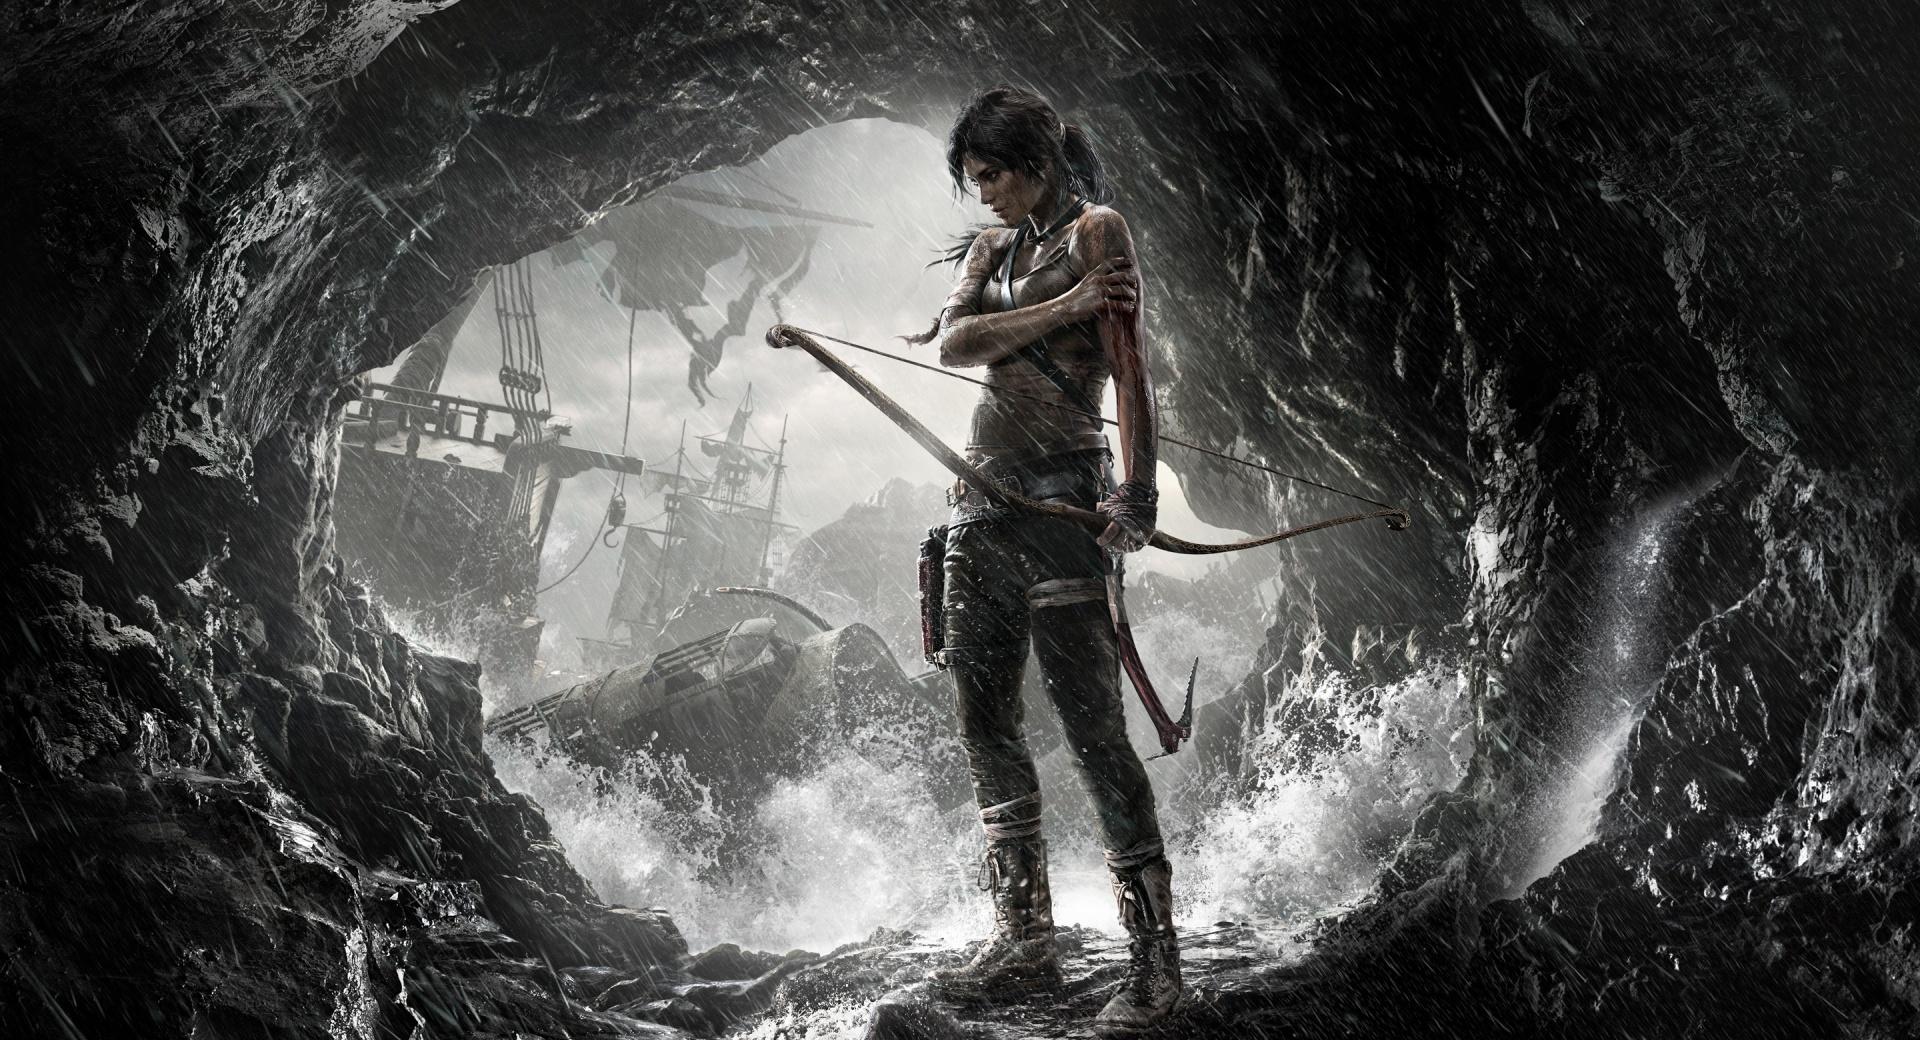 Tomb Raider Lara Croft 2013 at 1280 x 960 size wallpapers HD quality